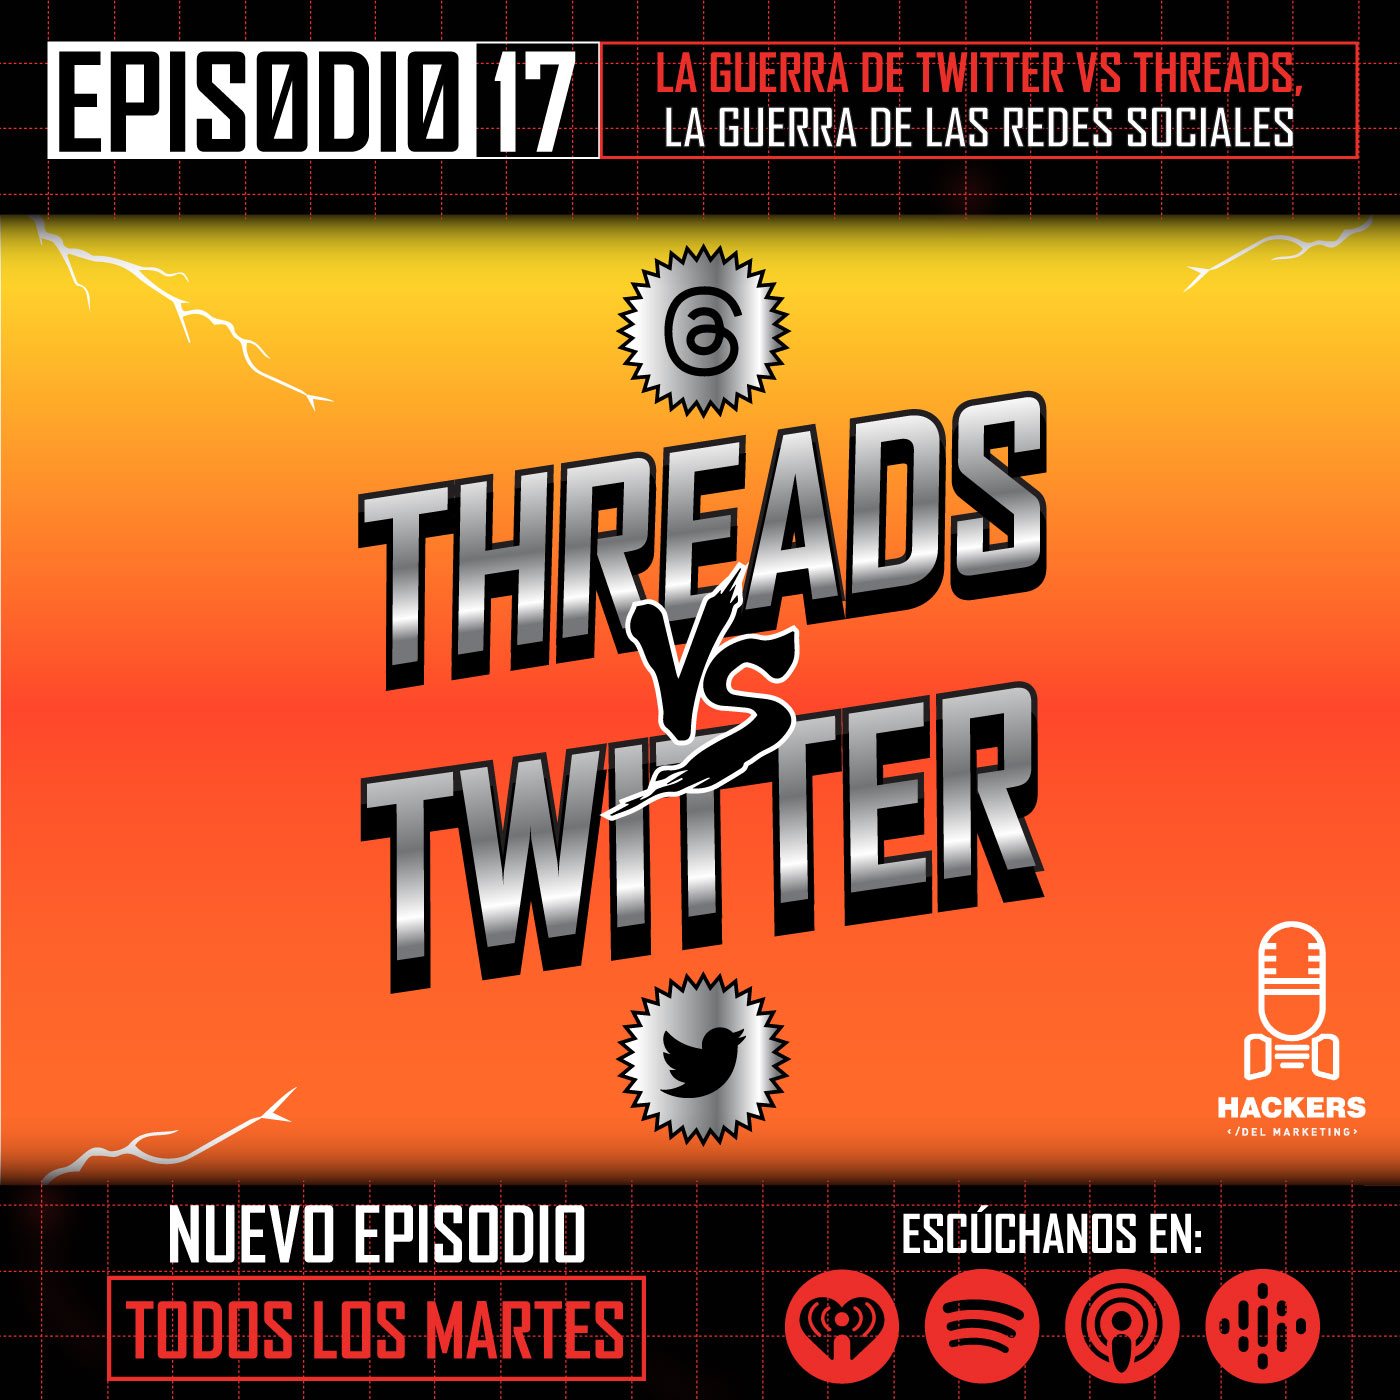 La guerra de Twitter vs Threads